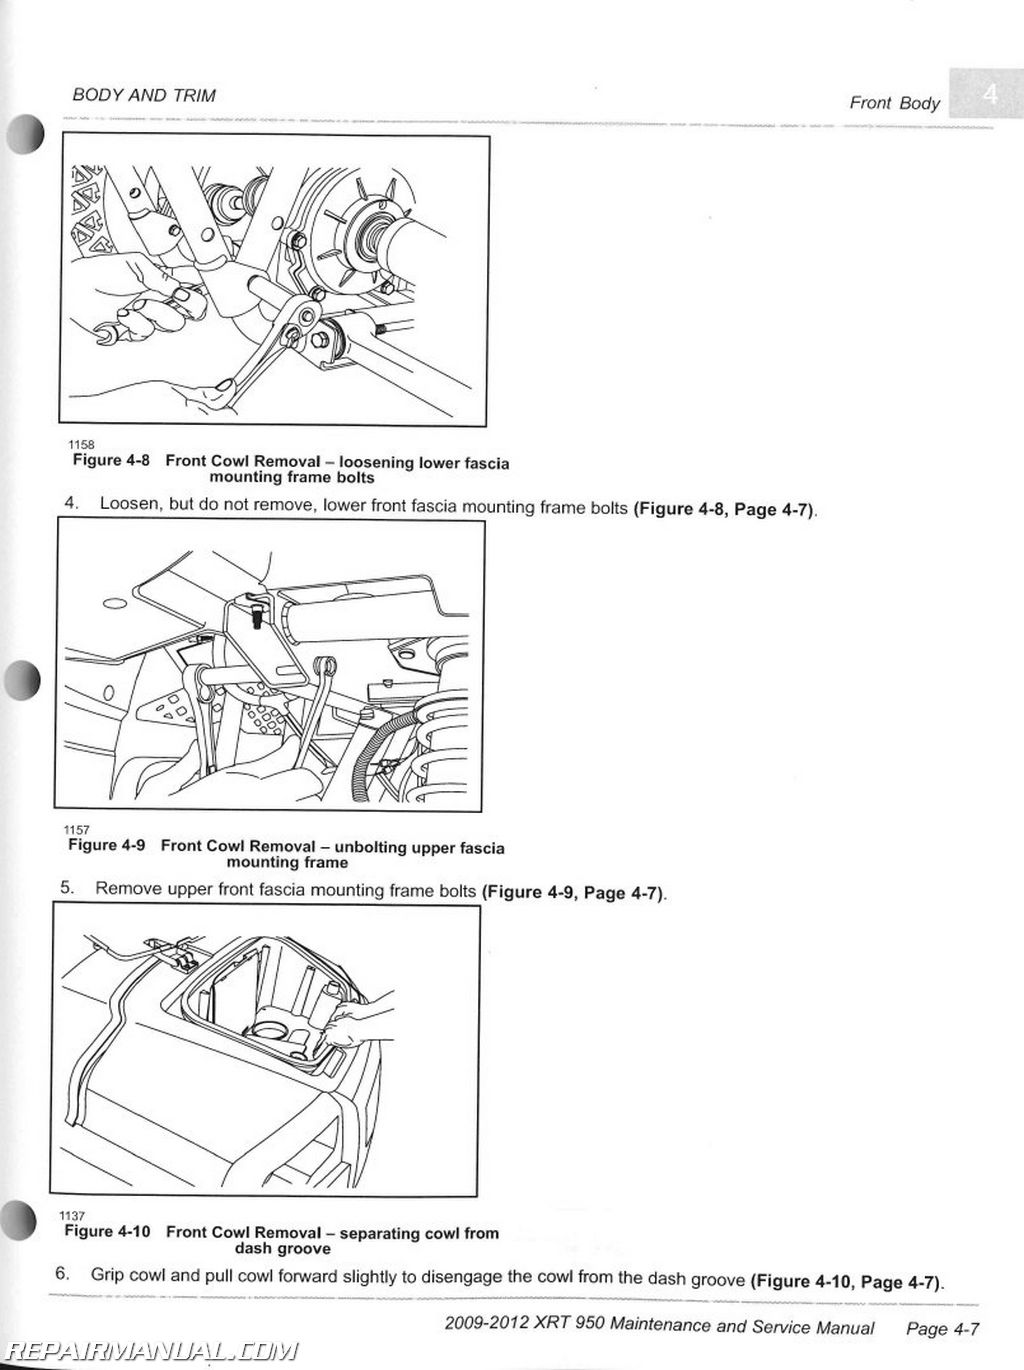 2009-2012 Club Car XRT 950 Maintenance Golf Cart Service Manual